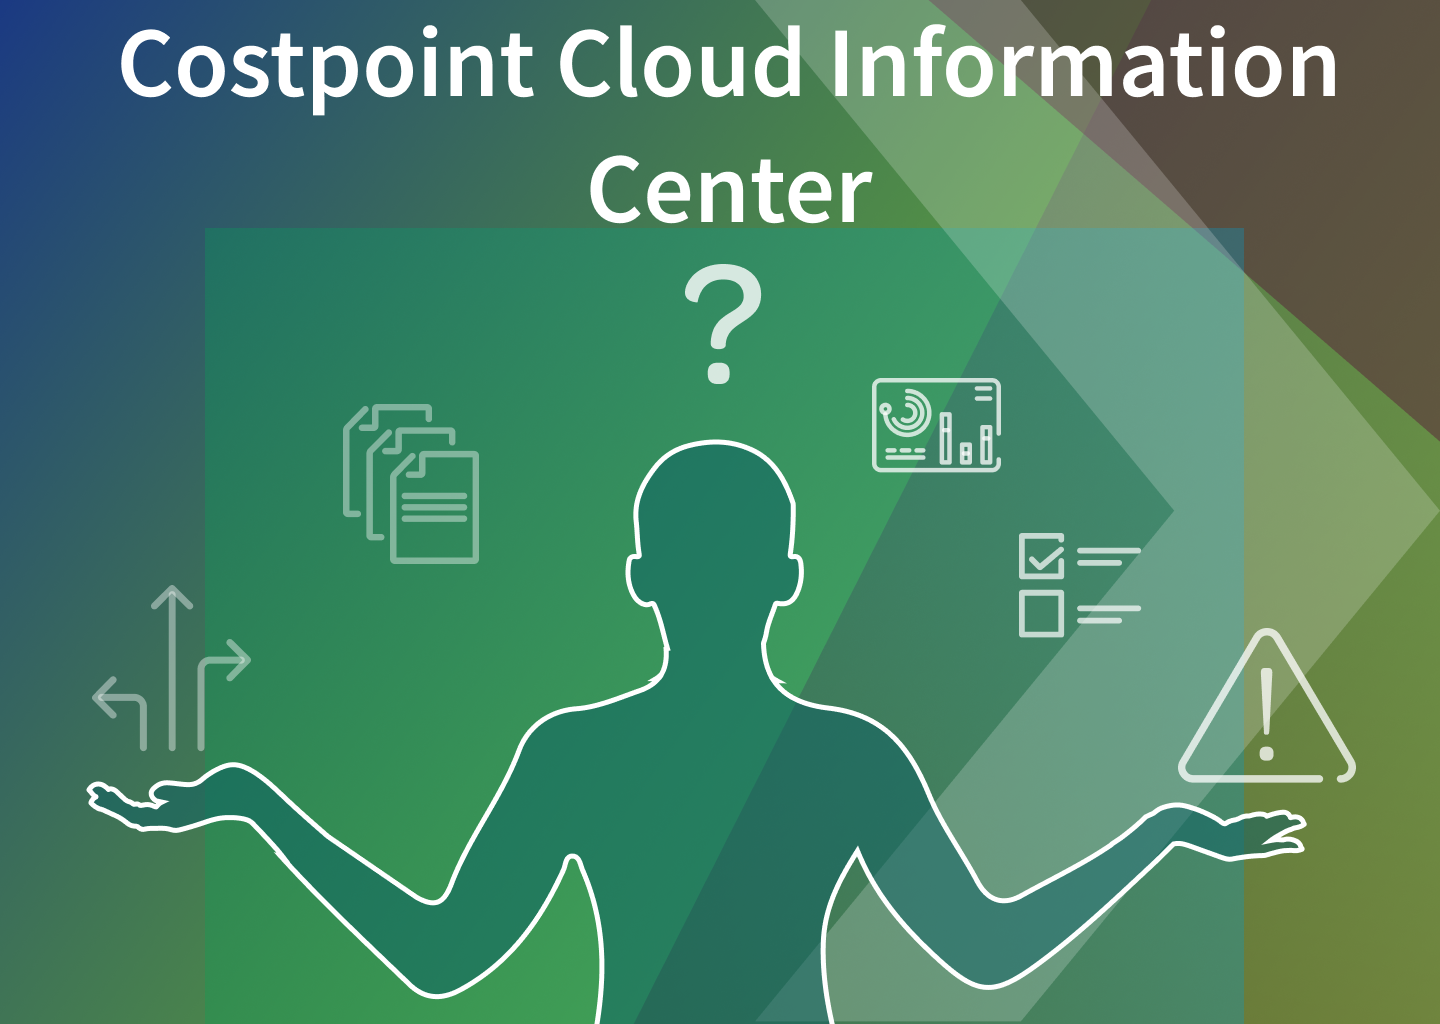 Costpoint Cloud Information Center